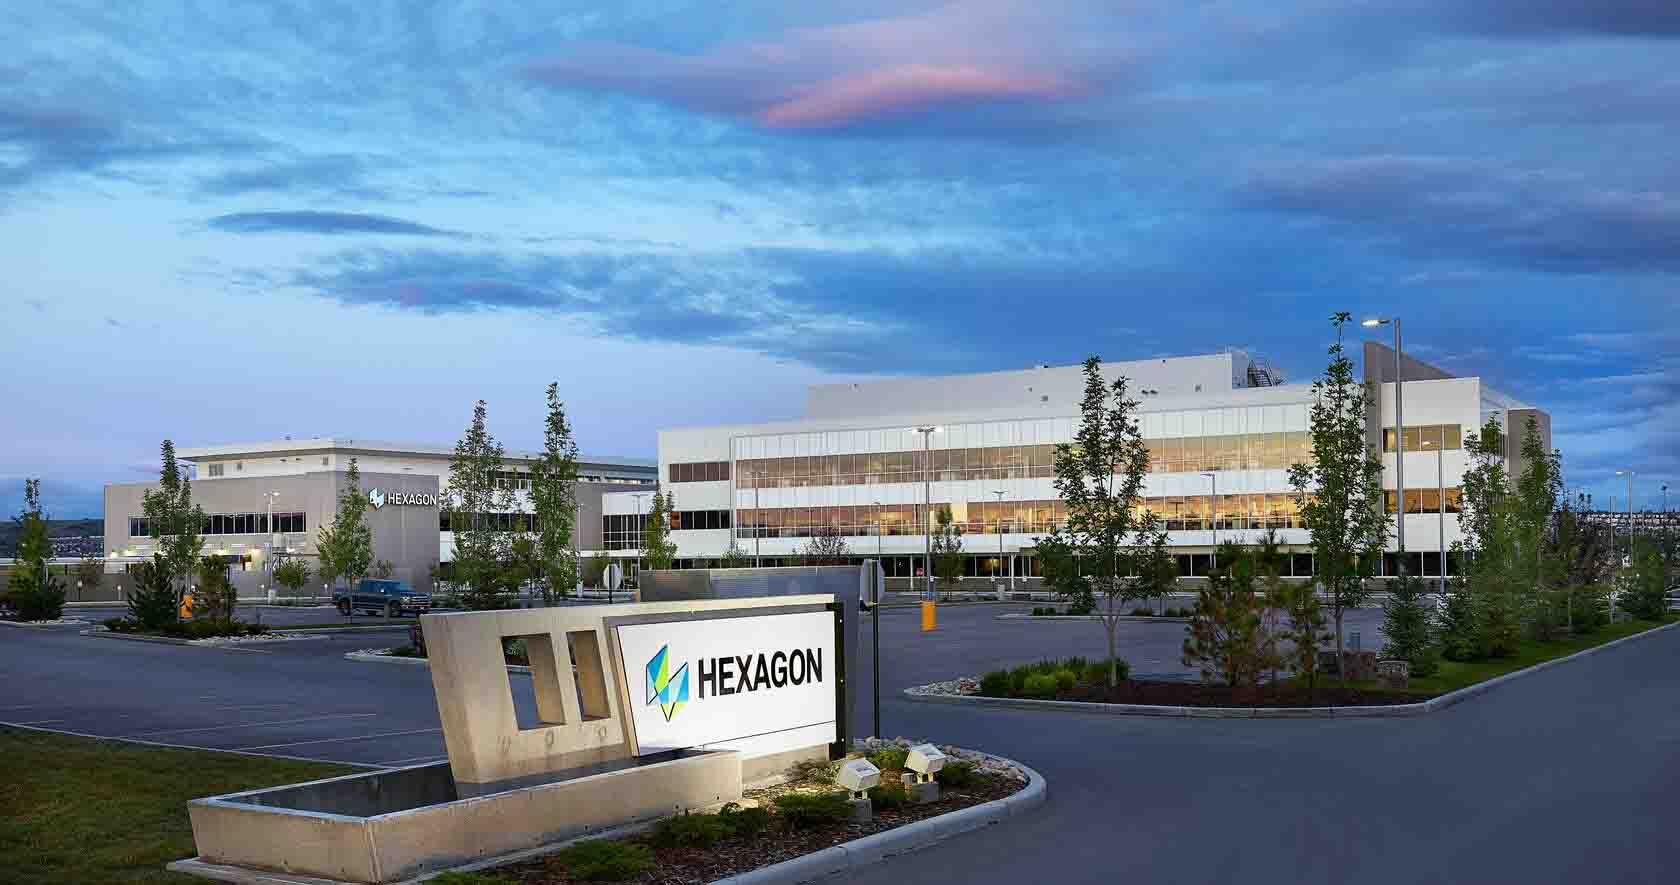 Photograph of Hexagon headquarters